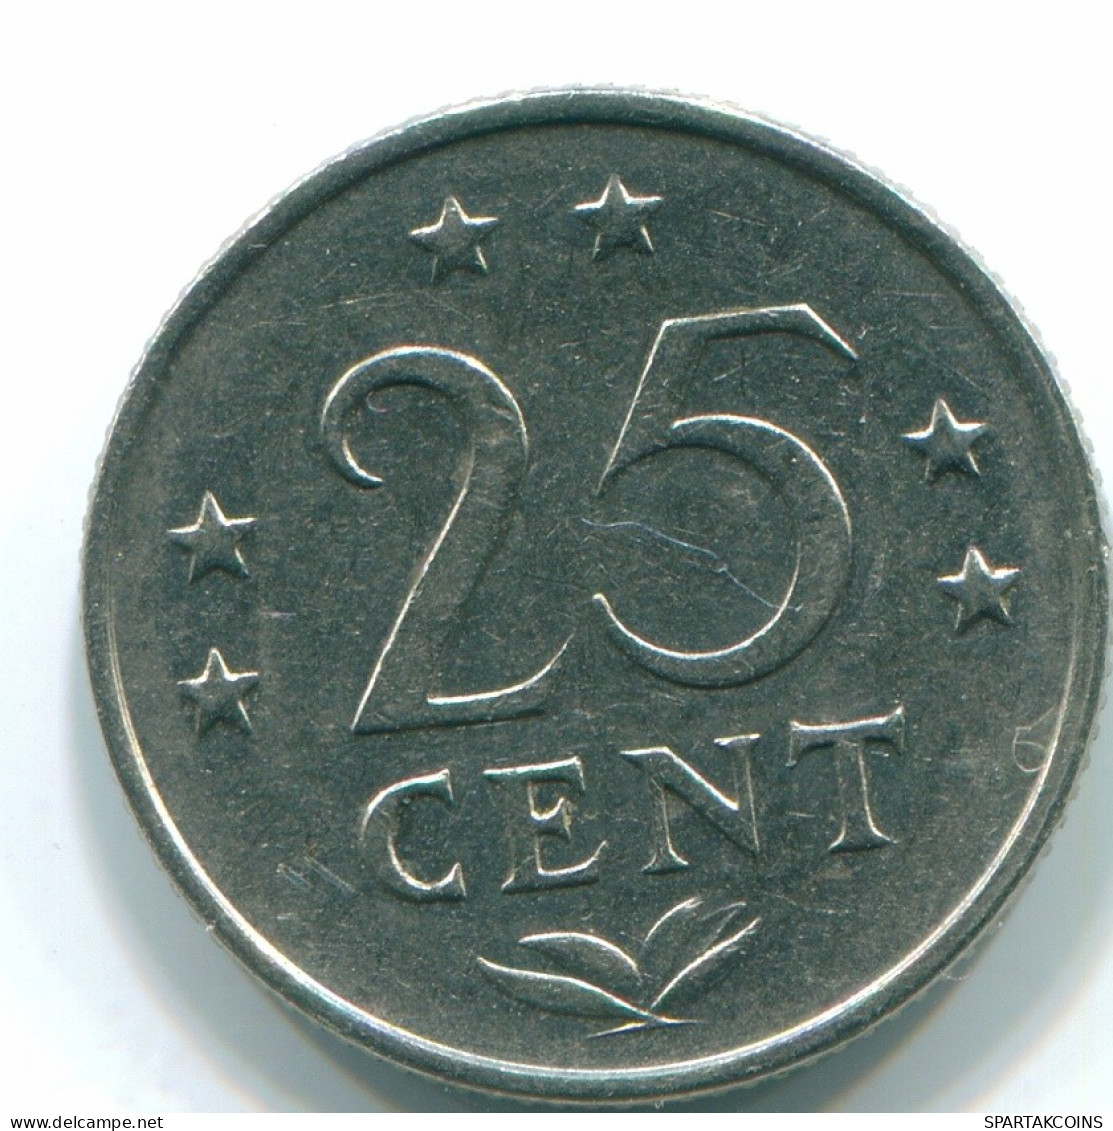 25 CENTS 1971 NIEDERLÄNDISCHE ANTILLEN Nickel Koloniale Münze #S11525.D.A - Netherlands Antilles